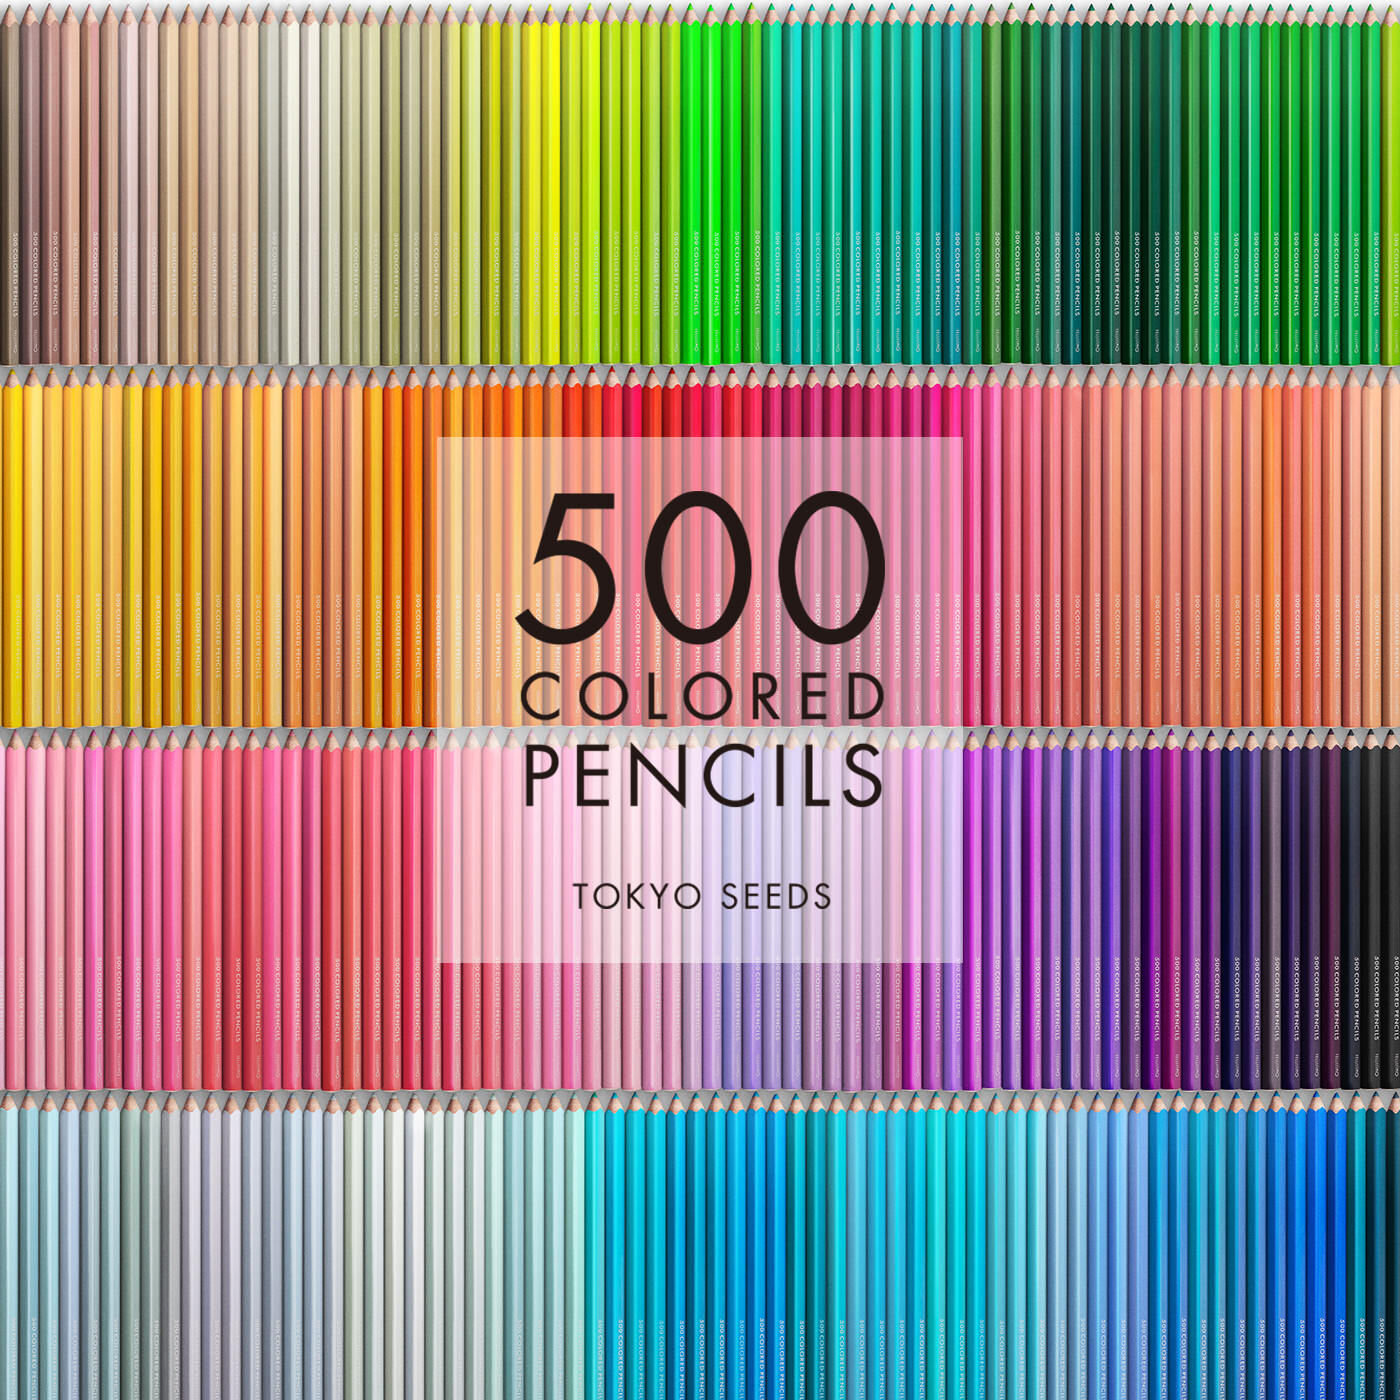 Real Stock|【333/500 ROYAL PRINCE】500色の色えんぴつ TOKYO SEEDS|1992年、世界初の「500色」という膨大な色数の色えんぴつが誕生して以来、その販売数は発売当初から合わせると、世界55ヵ国10万セット以上。今回、メイド・イン・ジャパンにこだわり、すべてが新しく生まれ変わって登場しました。